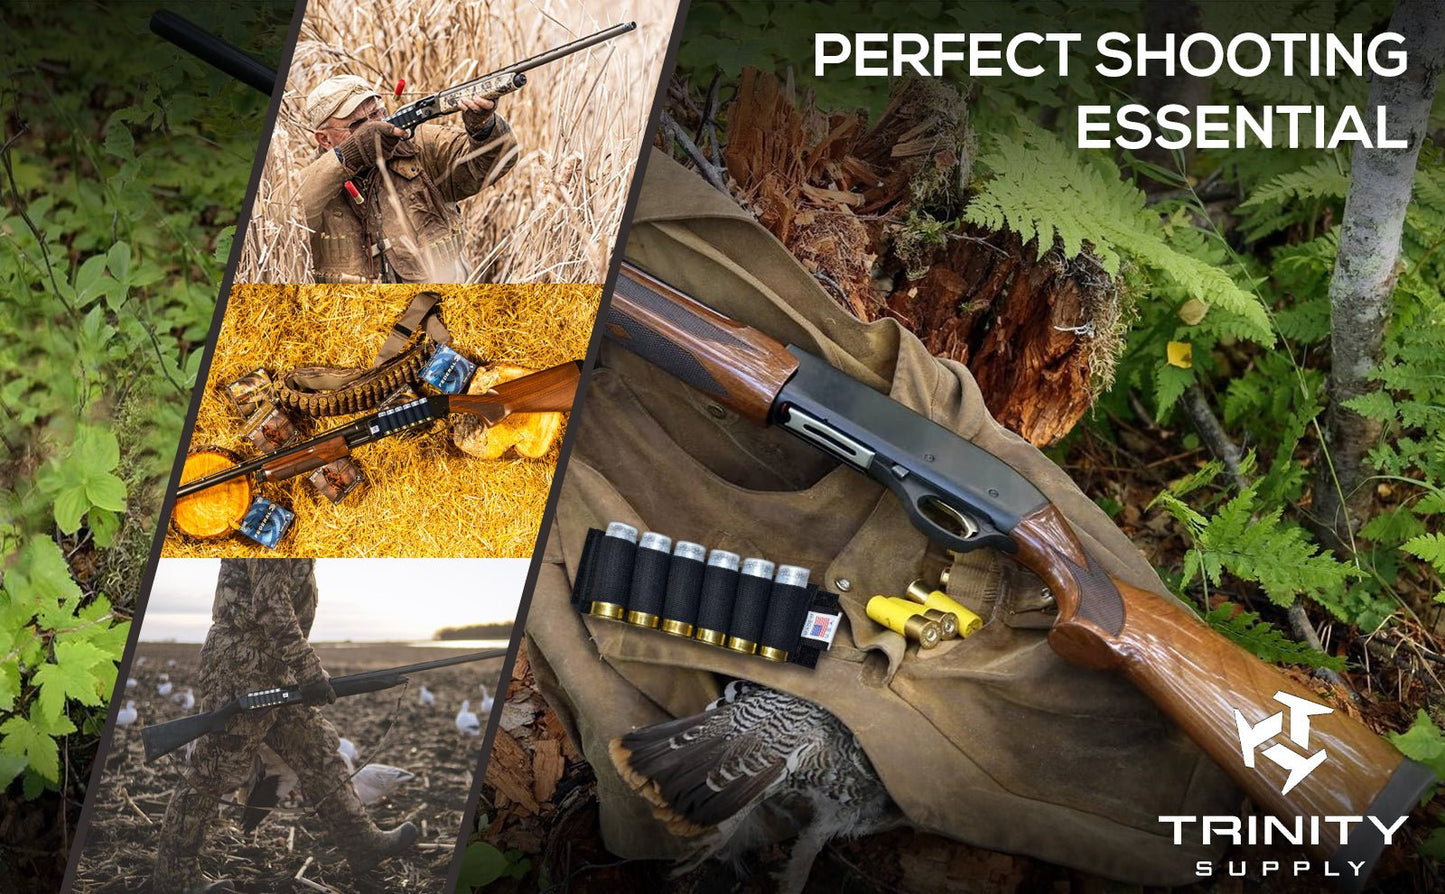 Trinity Shell Holder compatible with Beretta A300 12 gauge shotgun hunting gear. - TRINITY SUPPLY INC